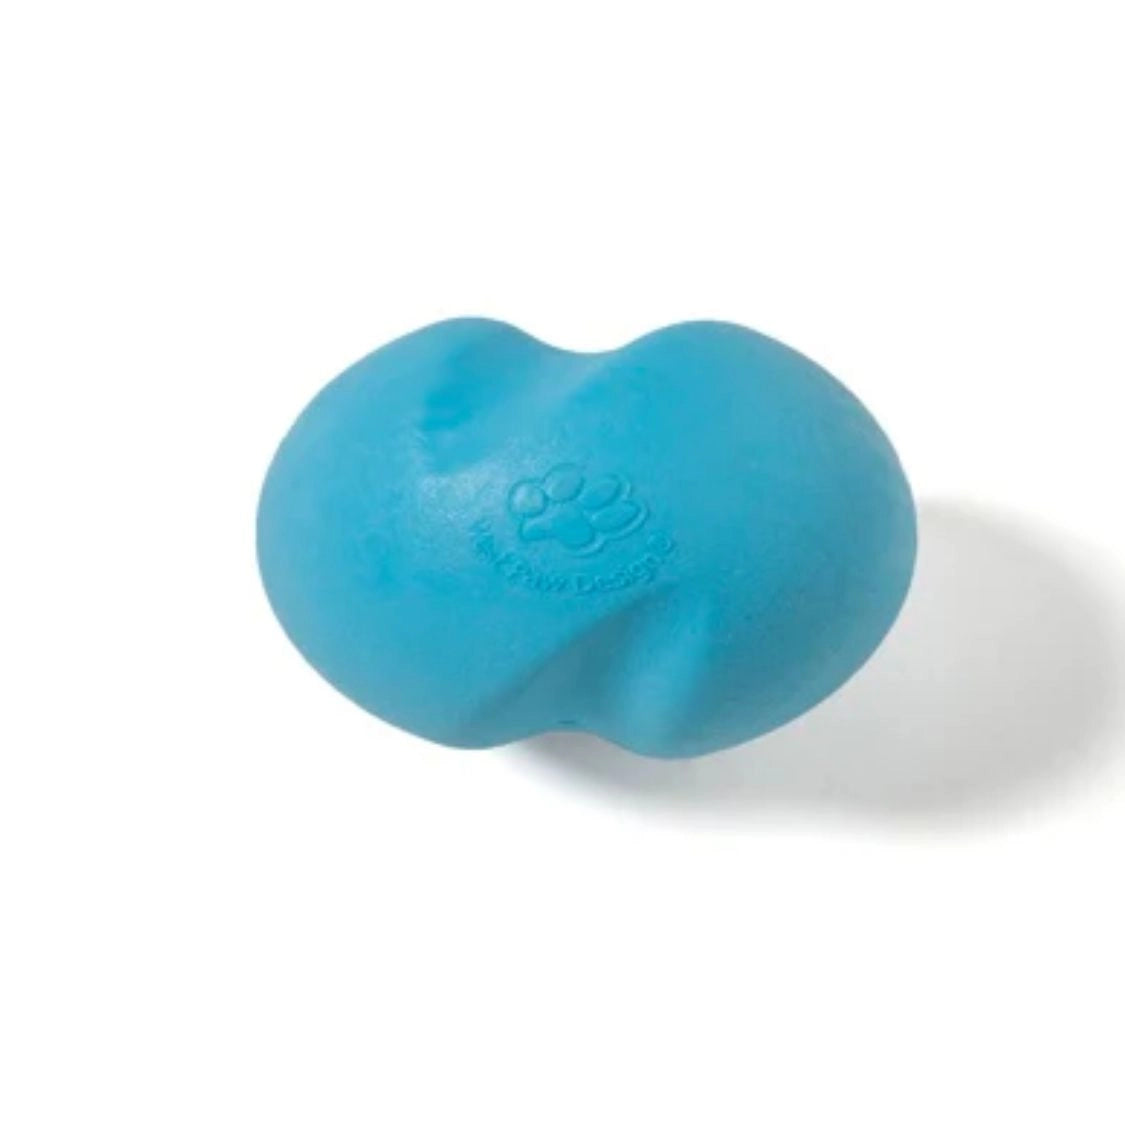 West Paw Zogoflex Jive Durable Ball Chew Toy for Dogs - Aqua Blue